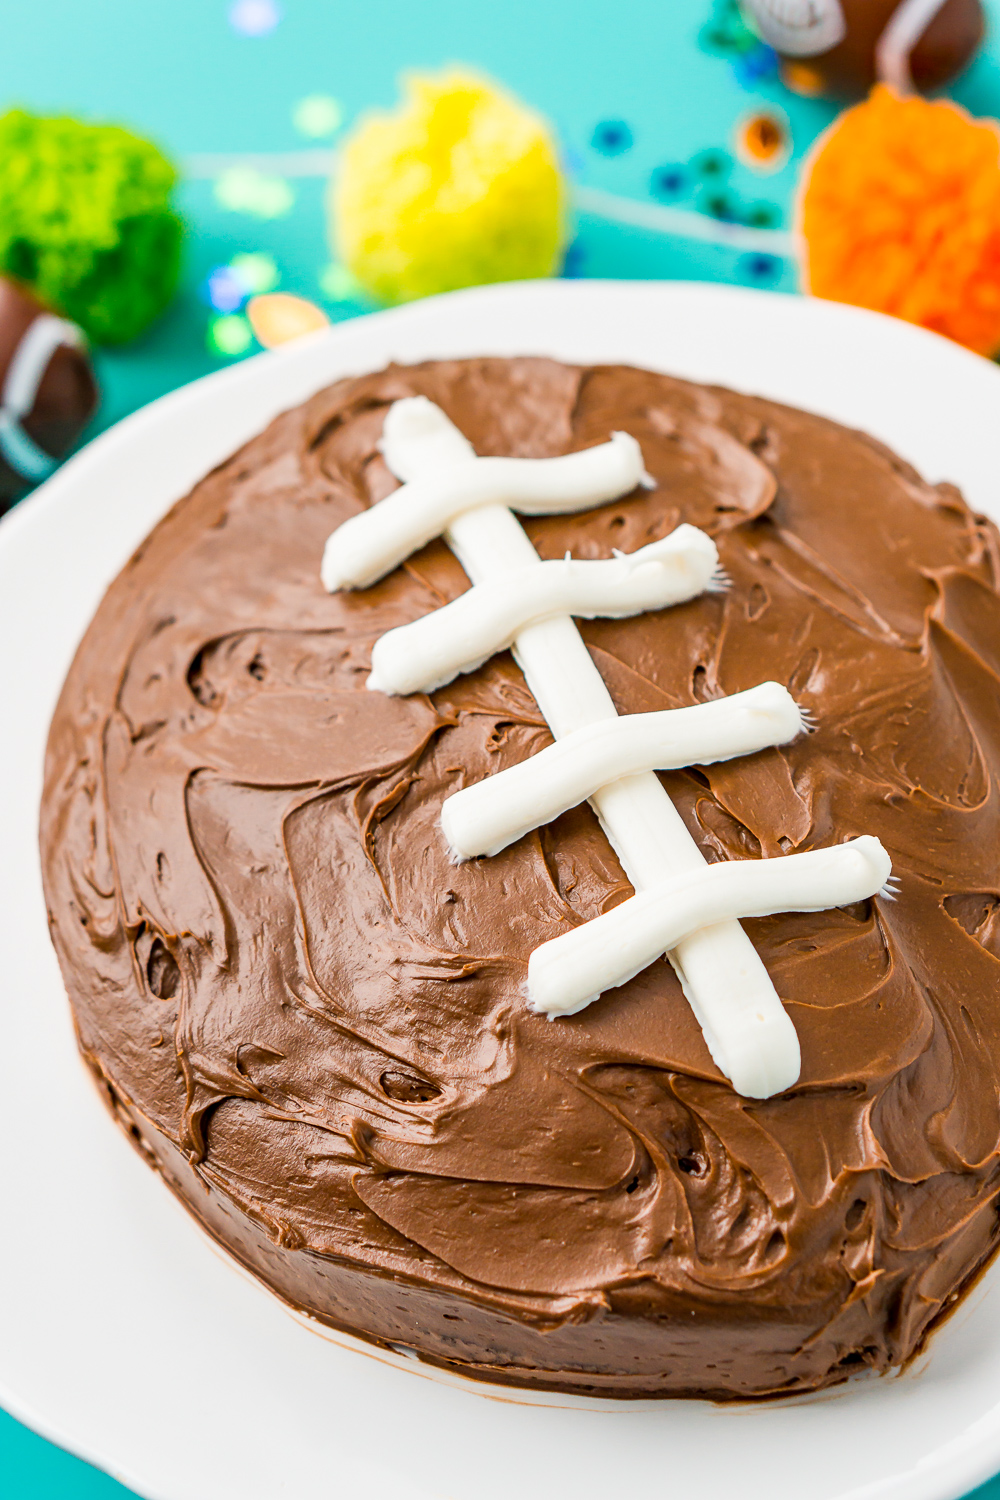 Football cake OC67 – Flurys